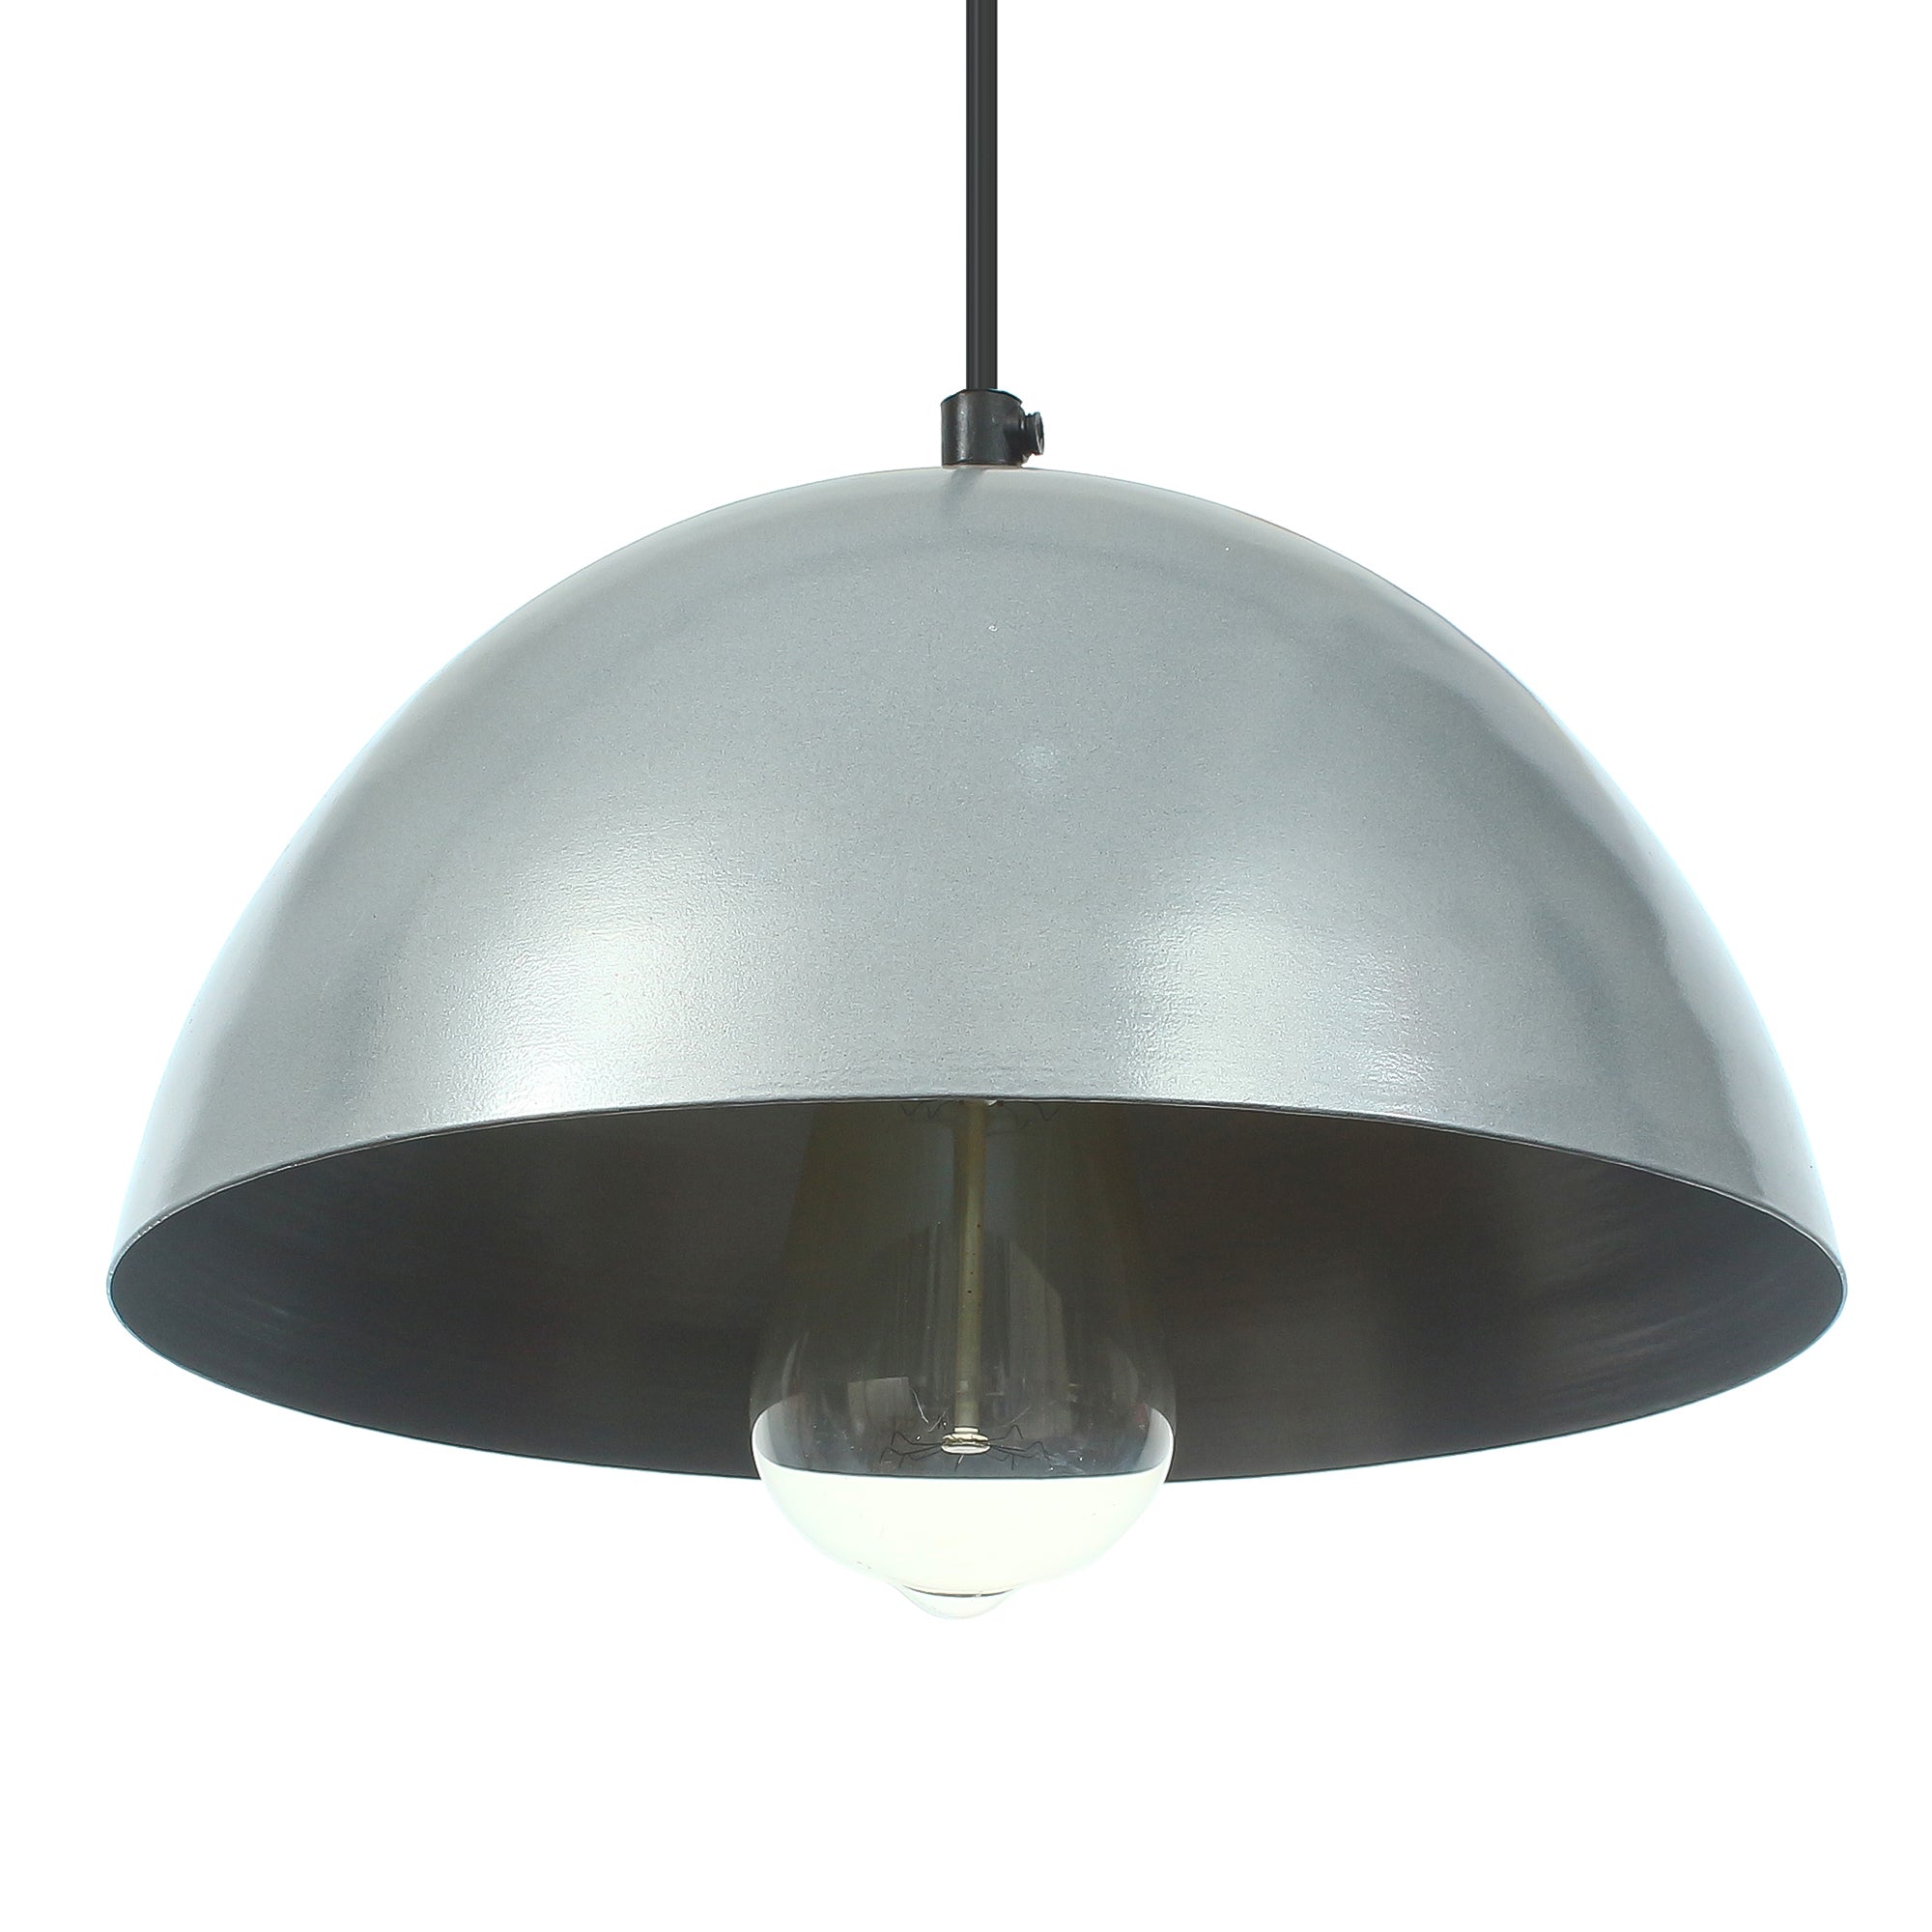 Shining Silver Glossy Finish Pendant Light, 10" Diameter Ceiling Hanging Lamp for Home/Living Room/Offices/Restaurants 2